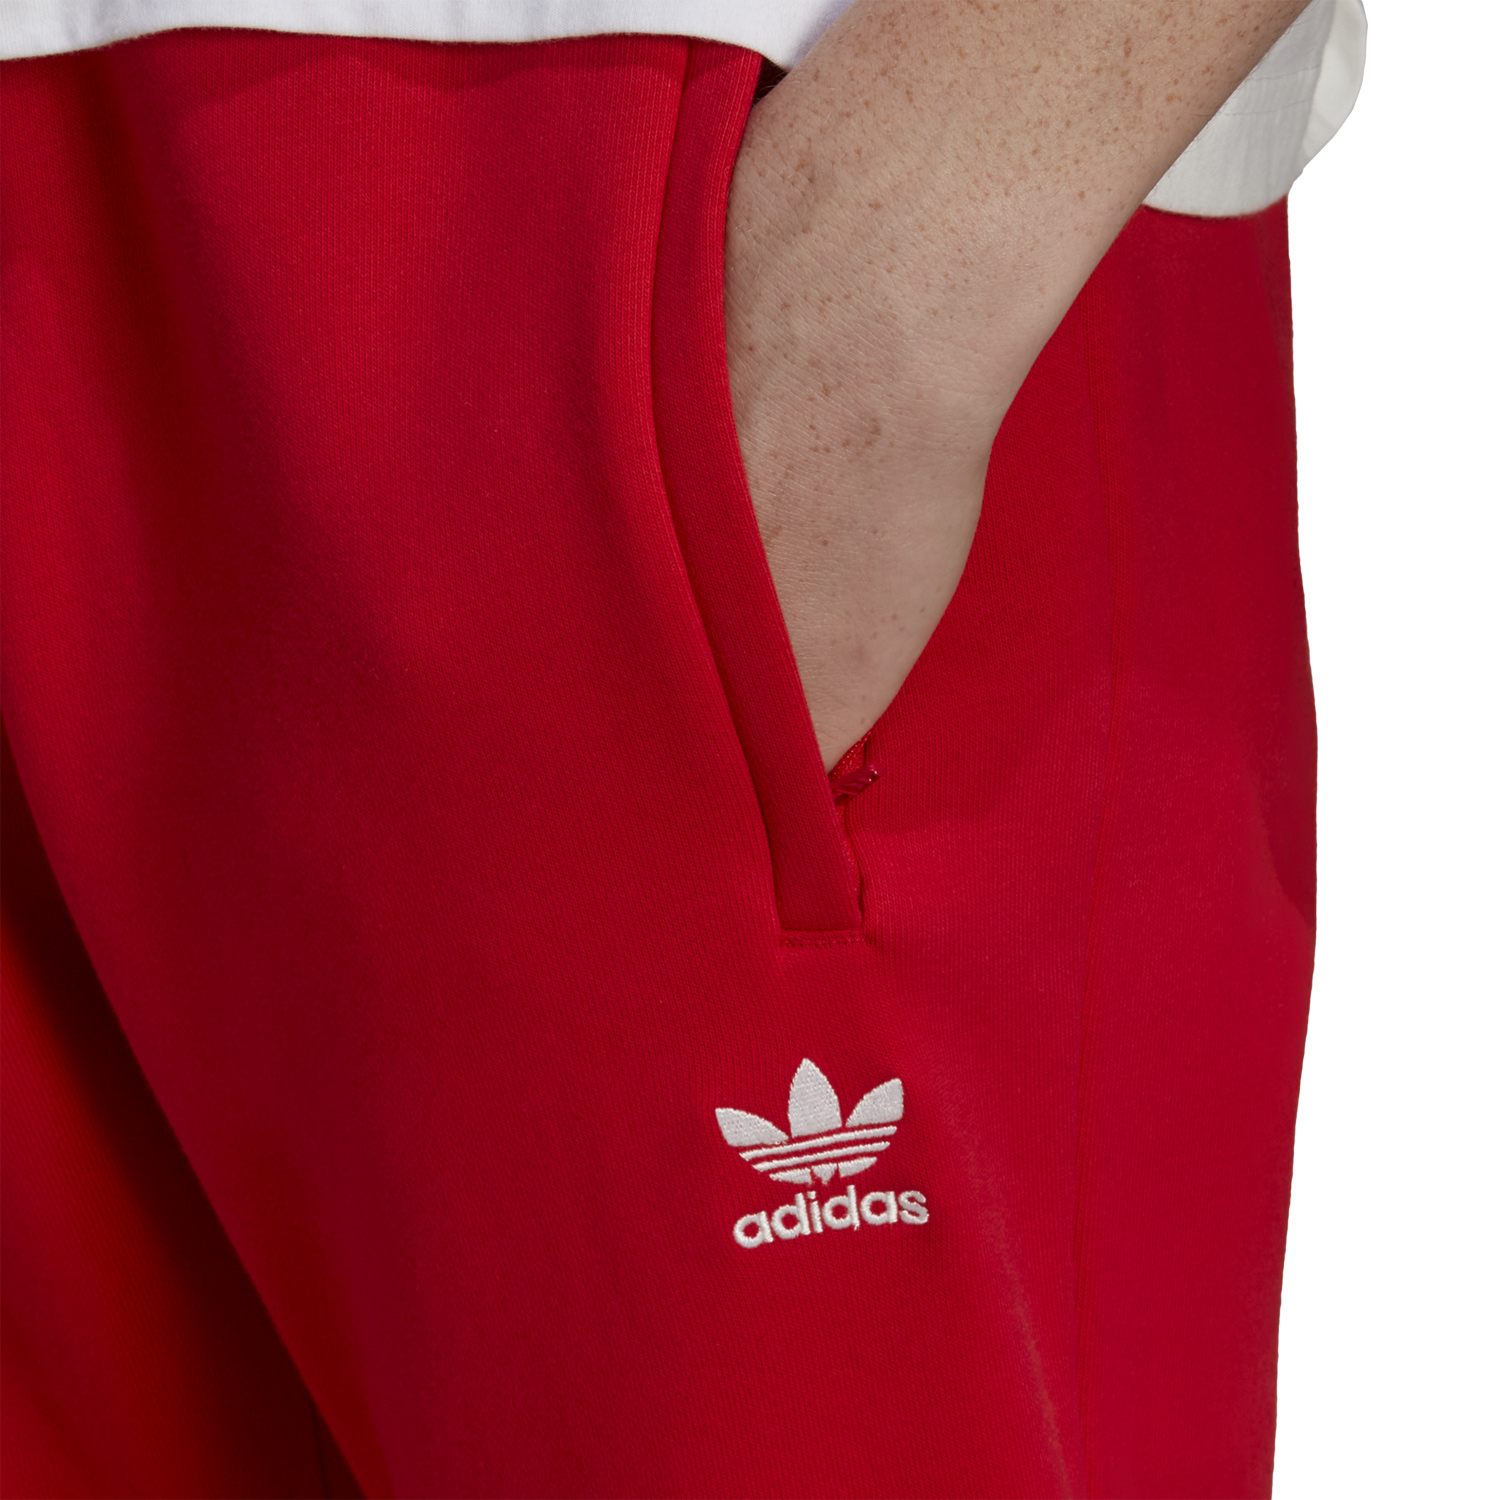 adidas-originals-trefoil-fleece-pants-red-white